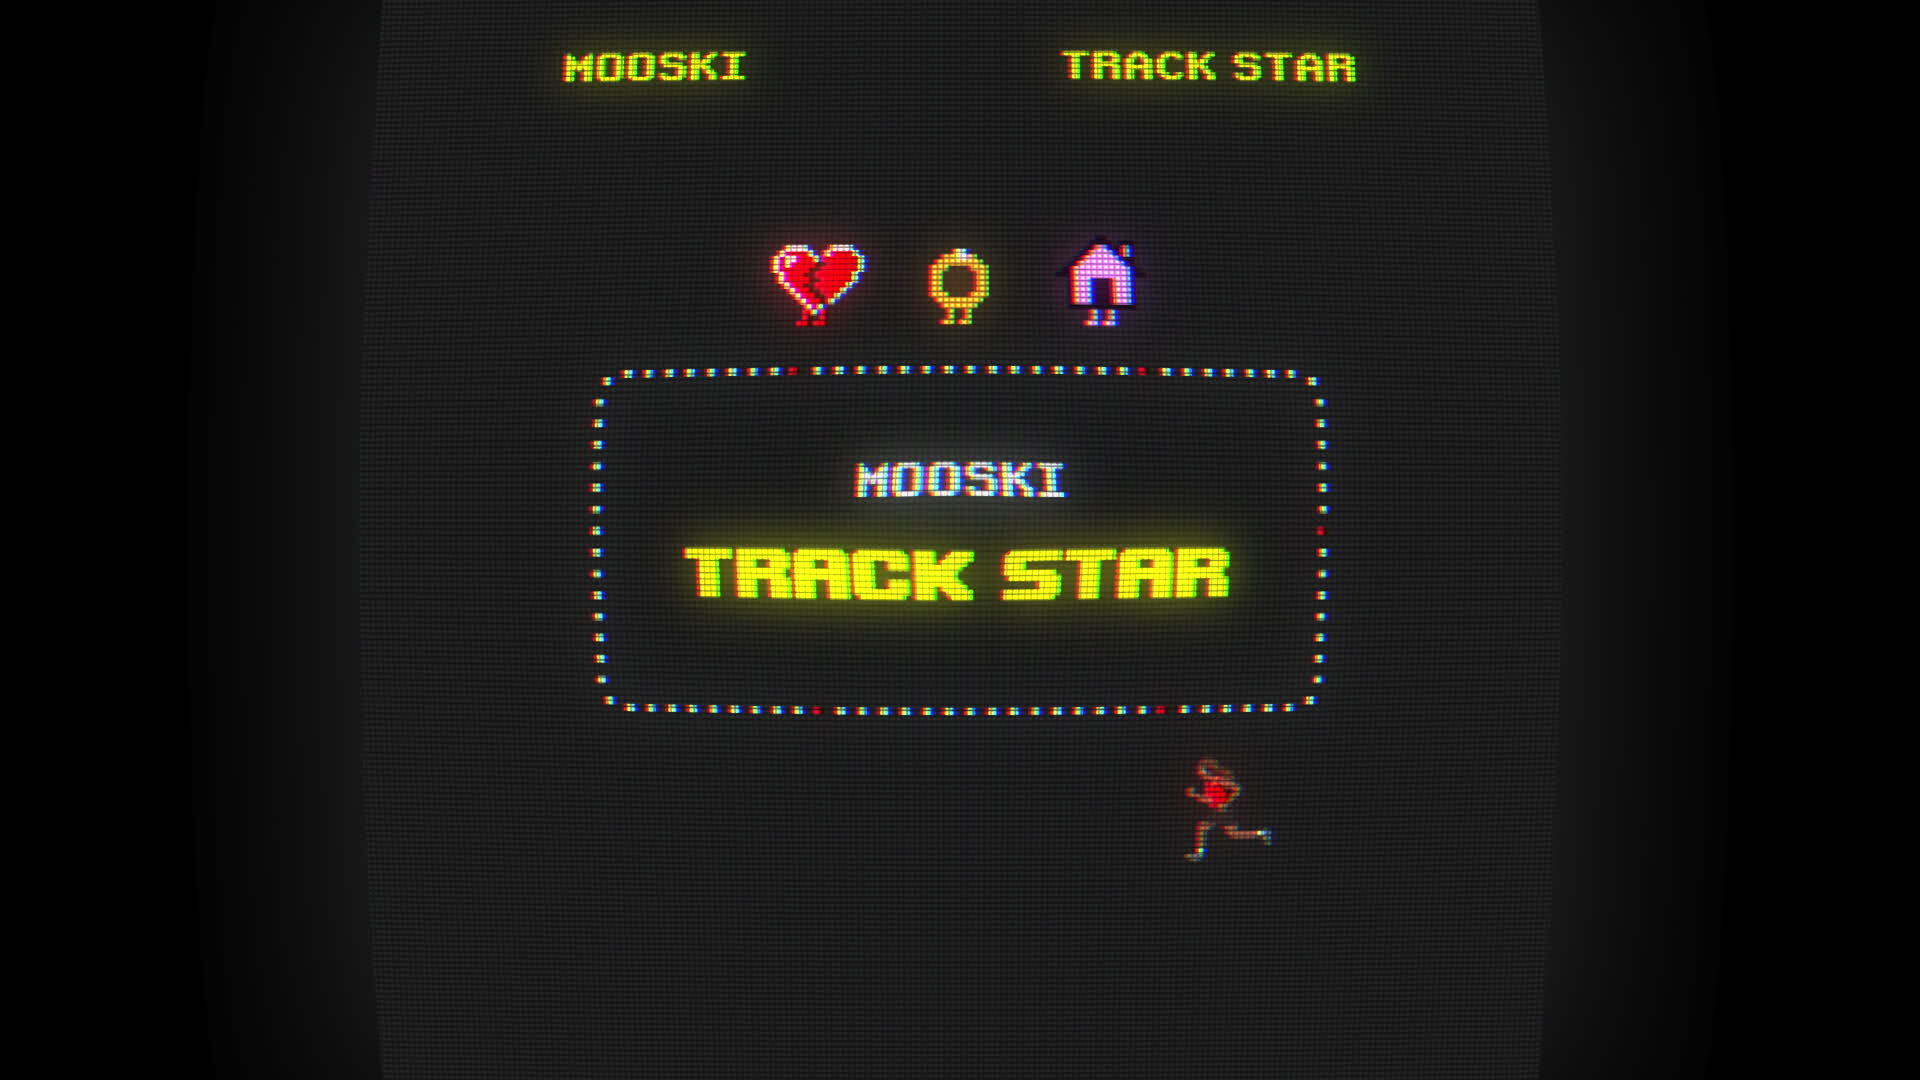 Track Star